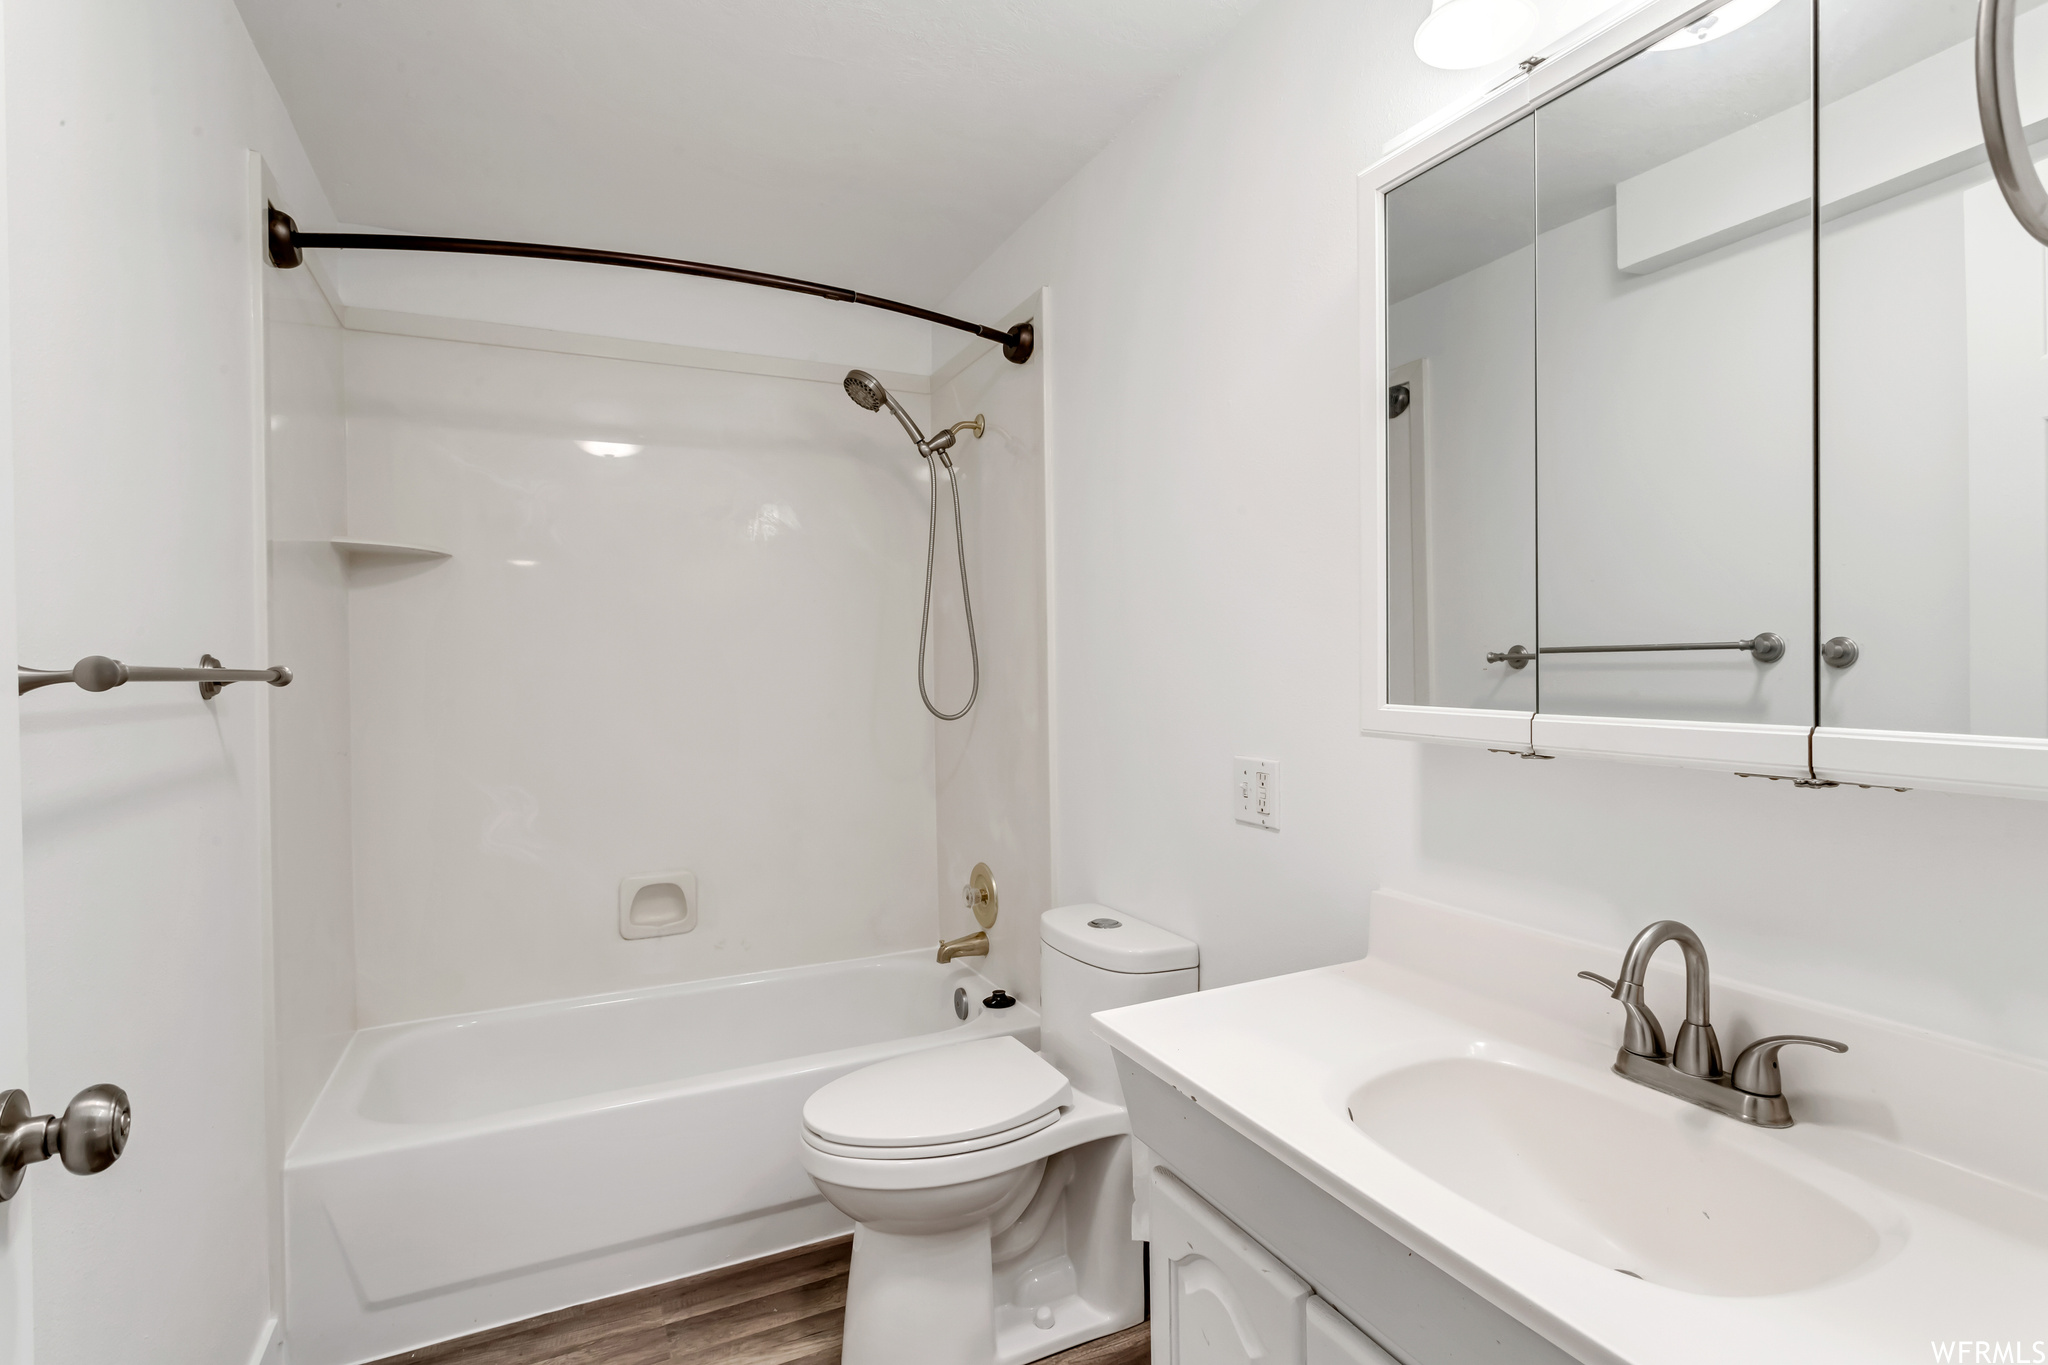 Full bathroom featuring bathtub / shower combination, hardwood floors, vanity, and mirror